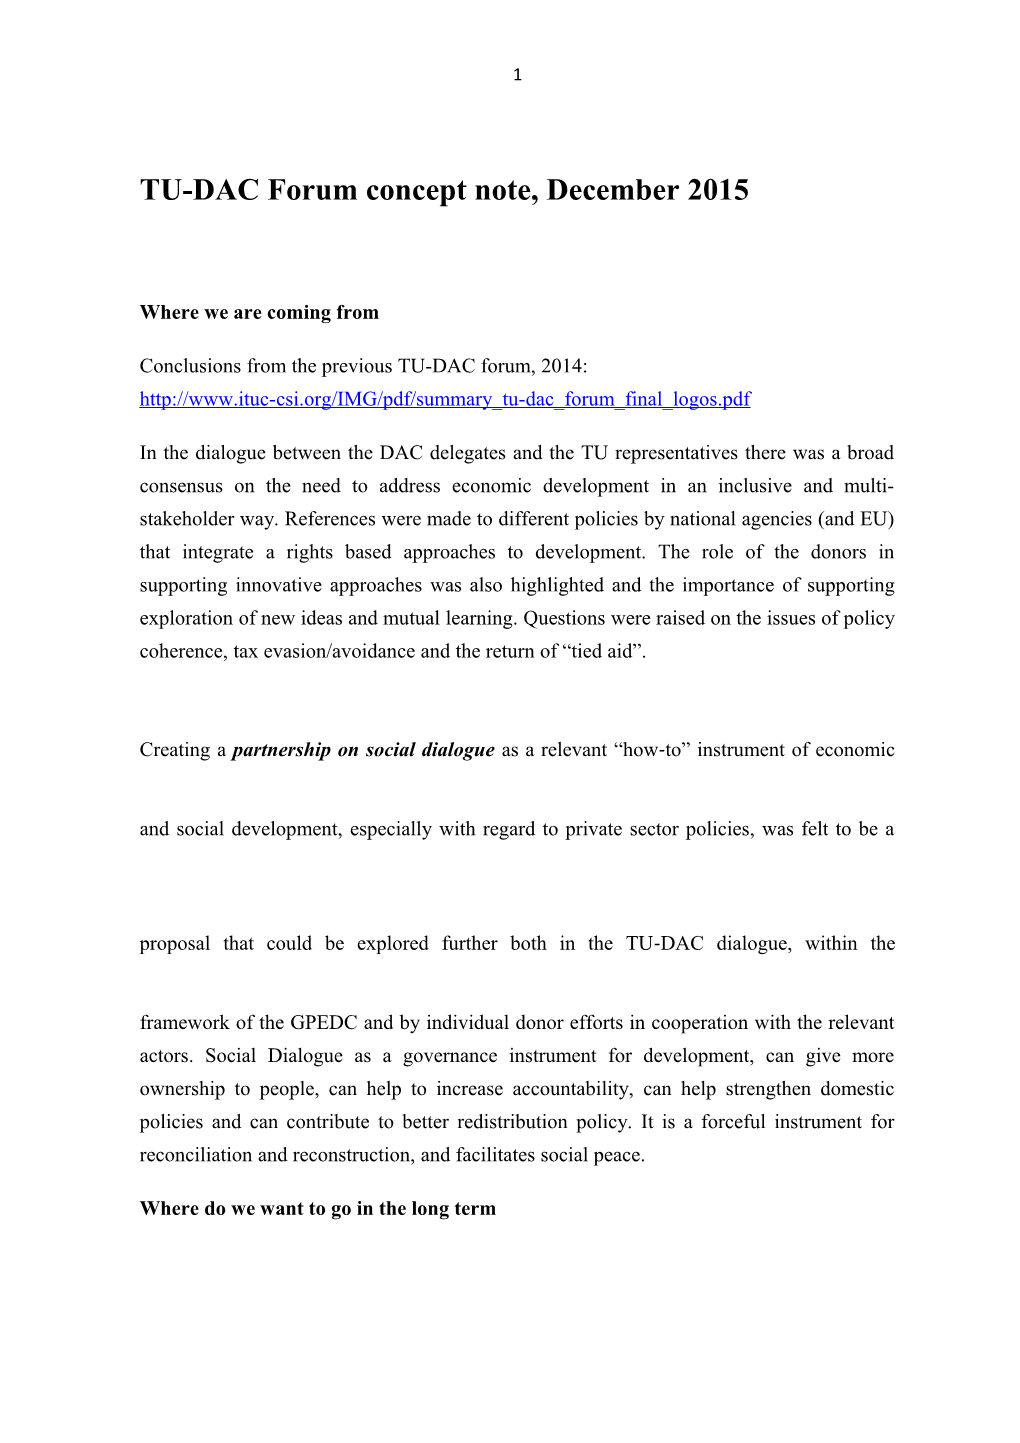 TU-DAC Forum Concept Note, December 2015